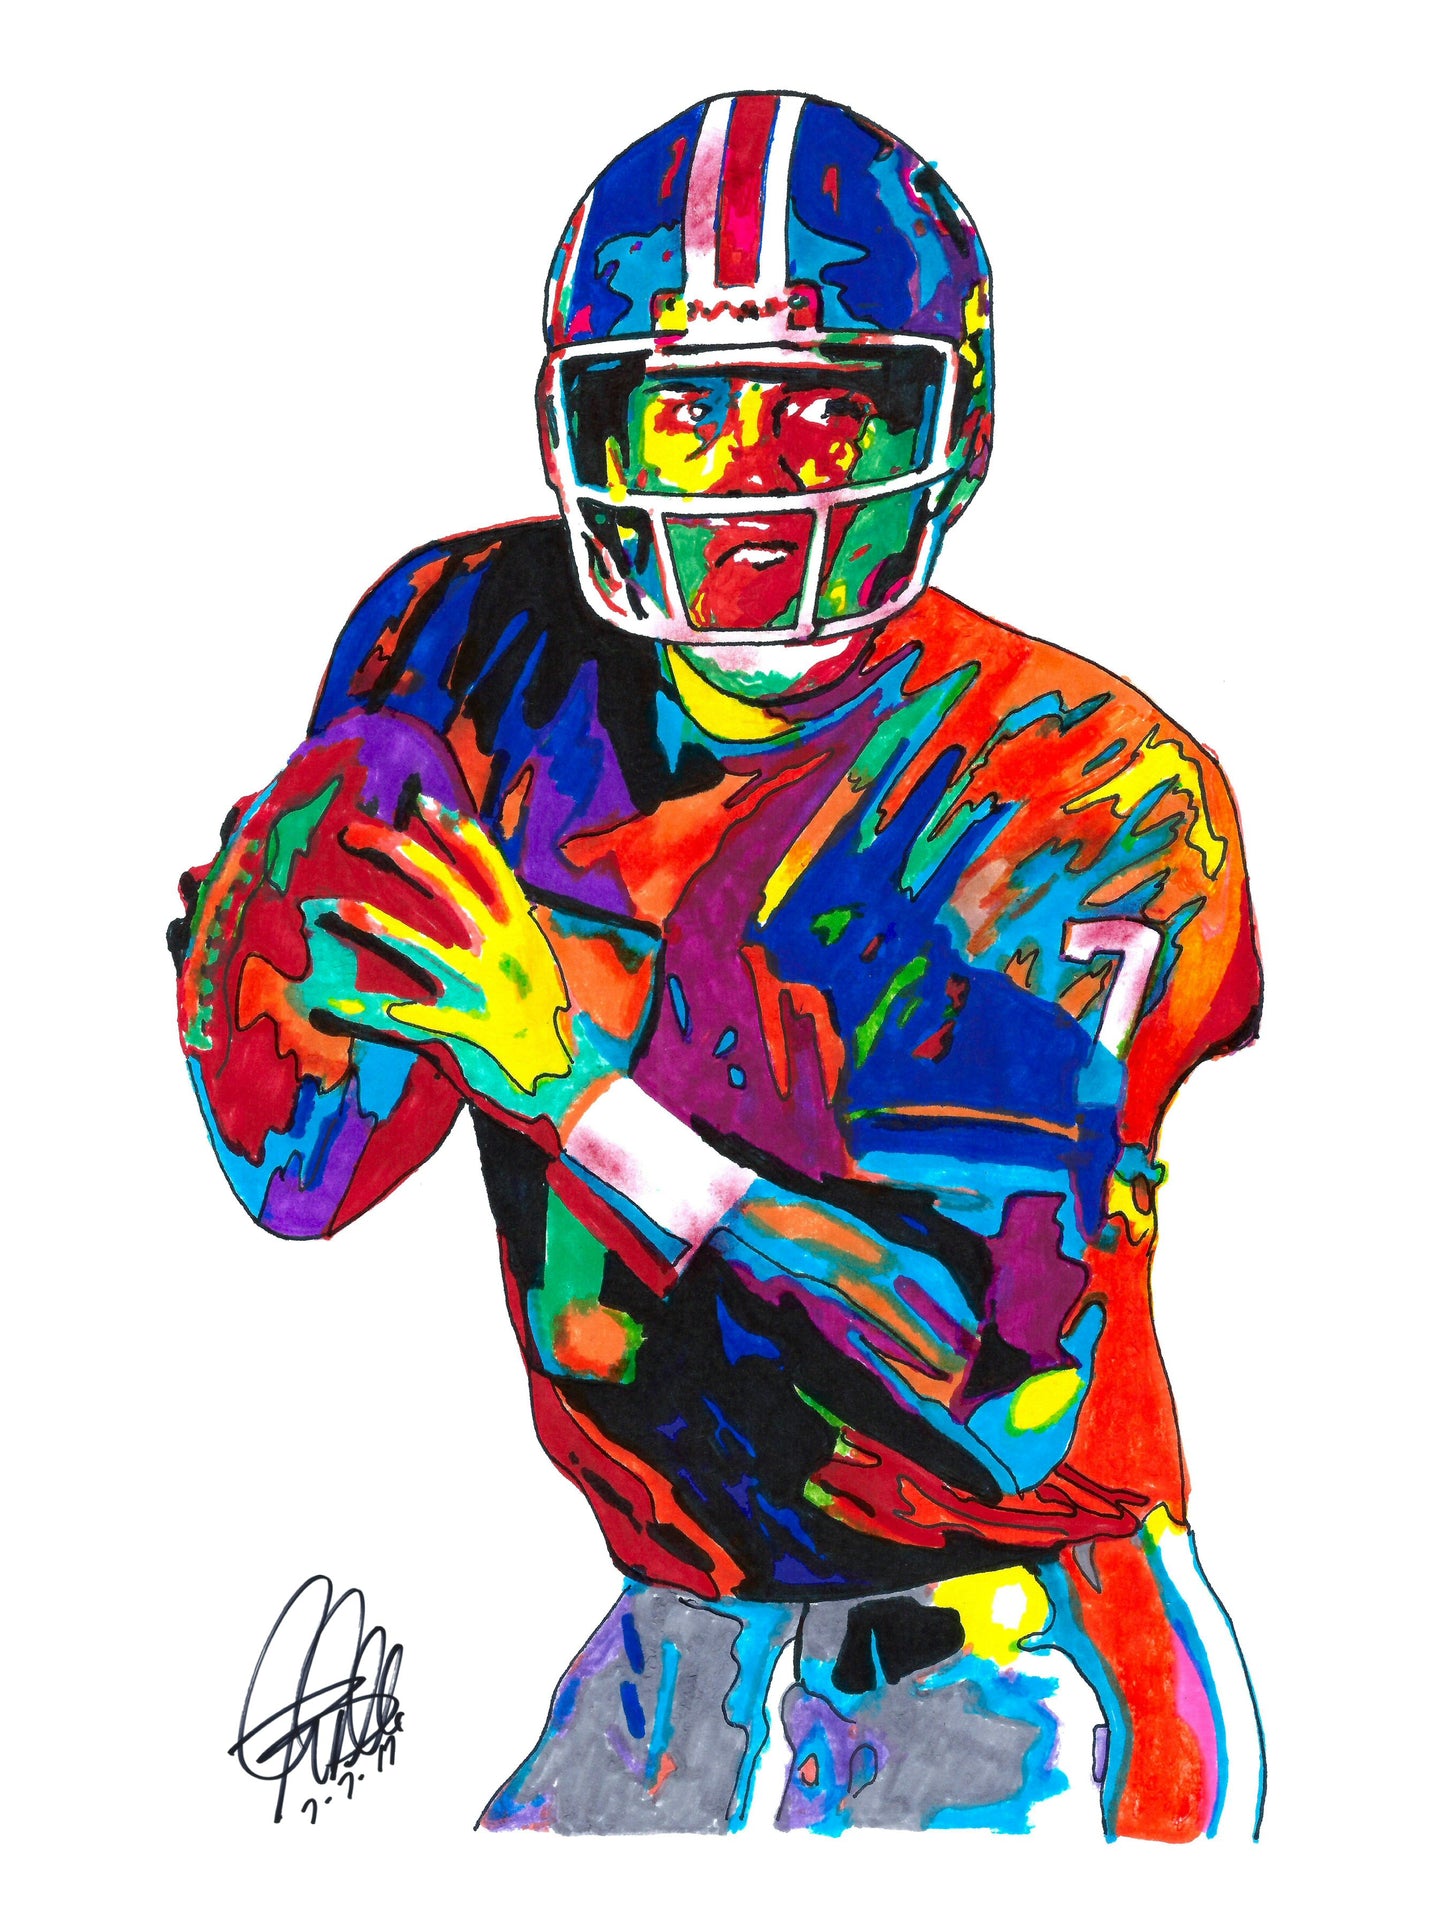 John Elway Denver Broncos QB Football Sports Poster Print Wall Art 8.5x11